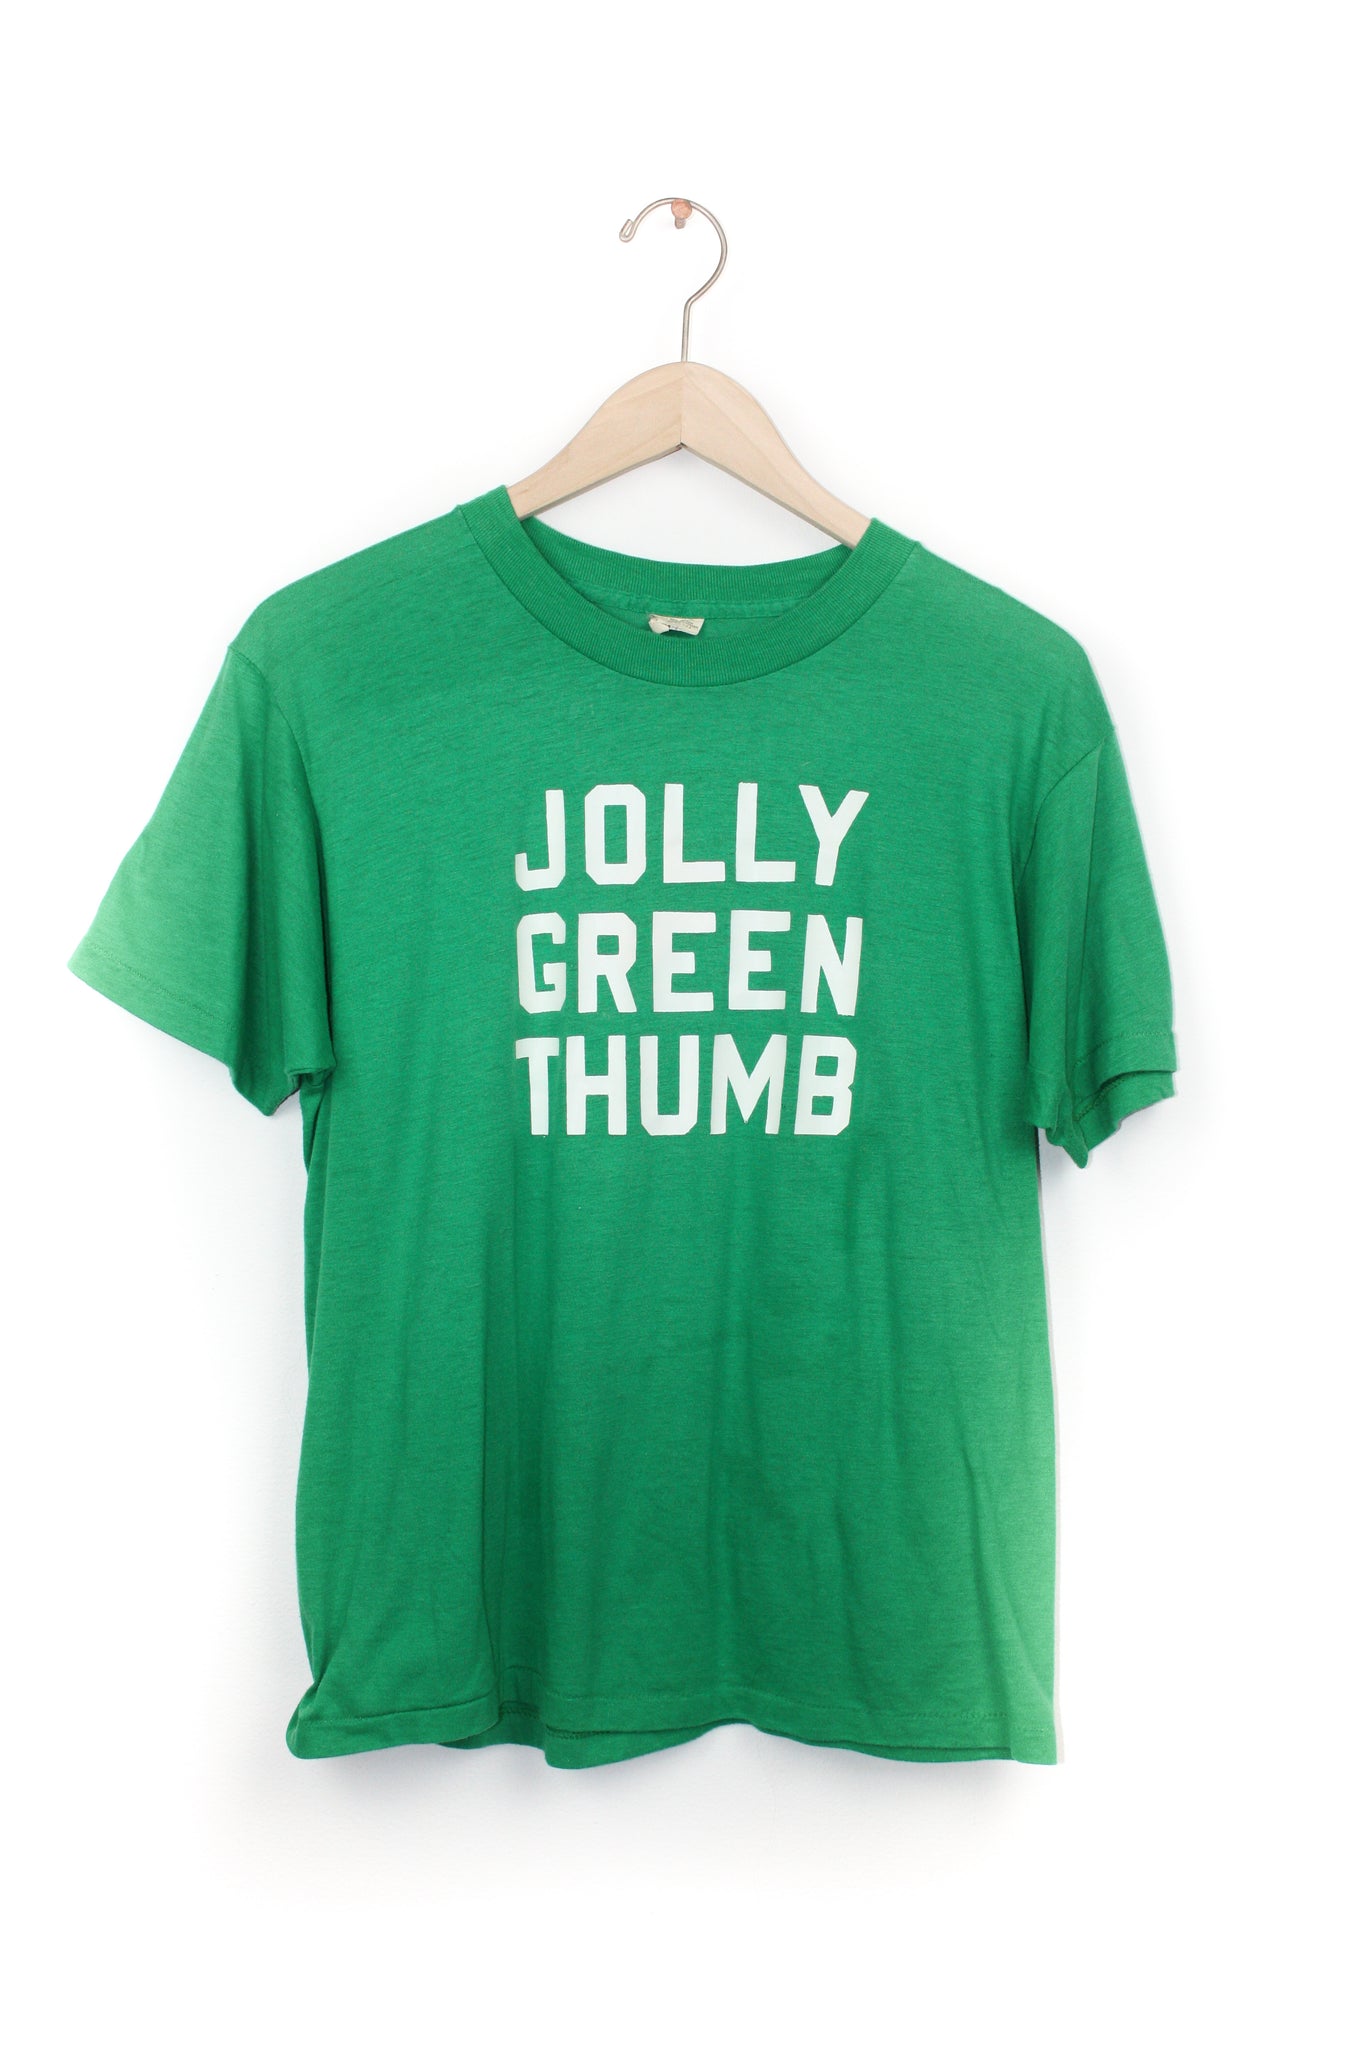 JOLLY GREEN THUMB